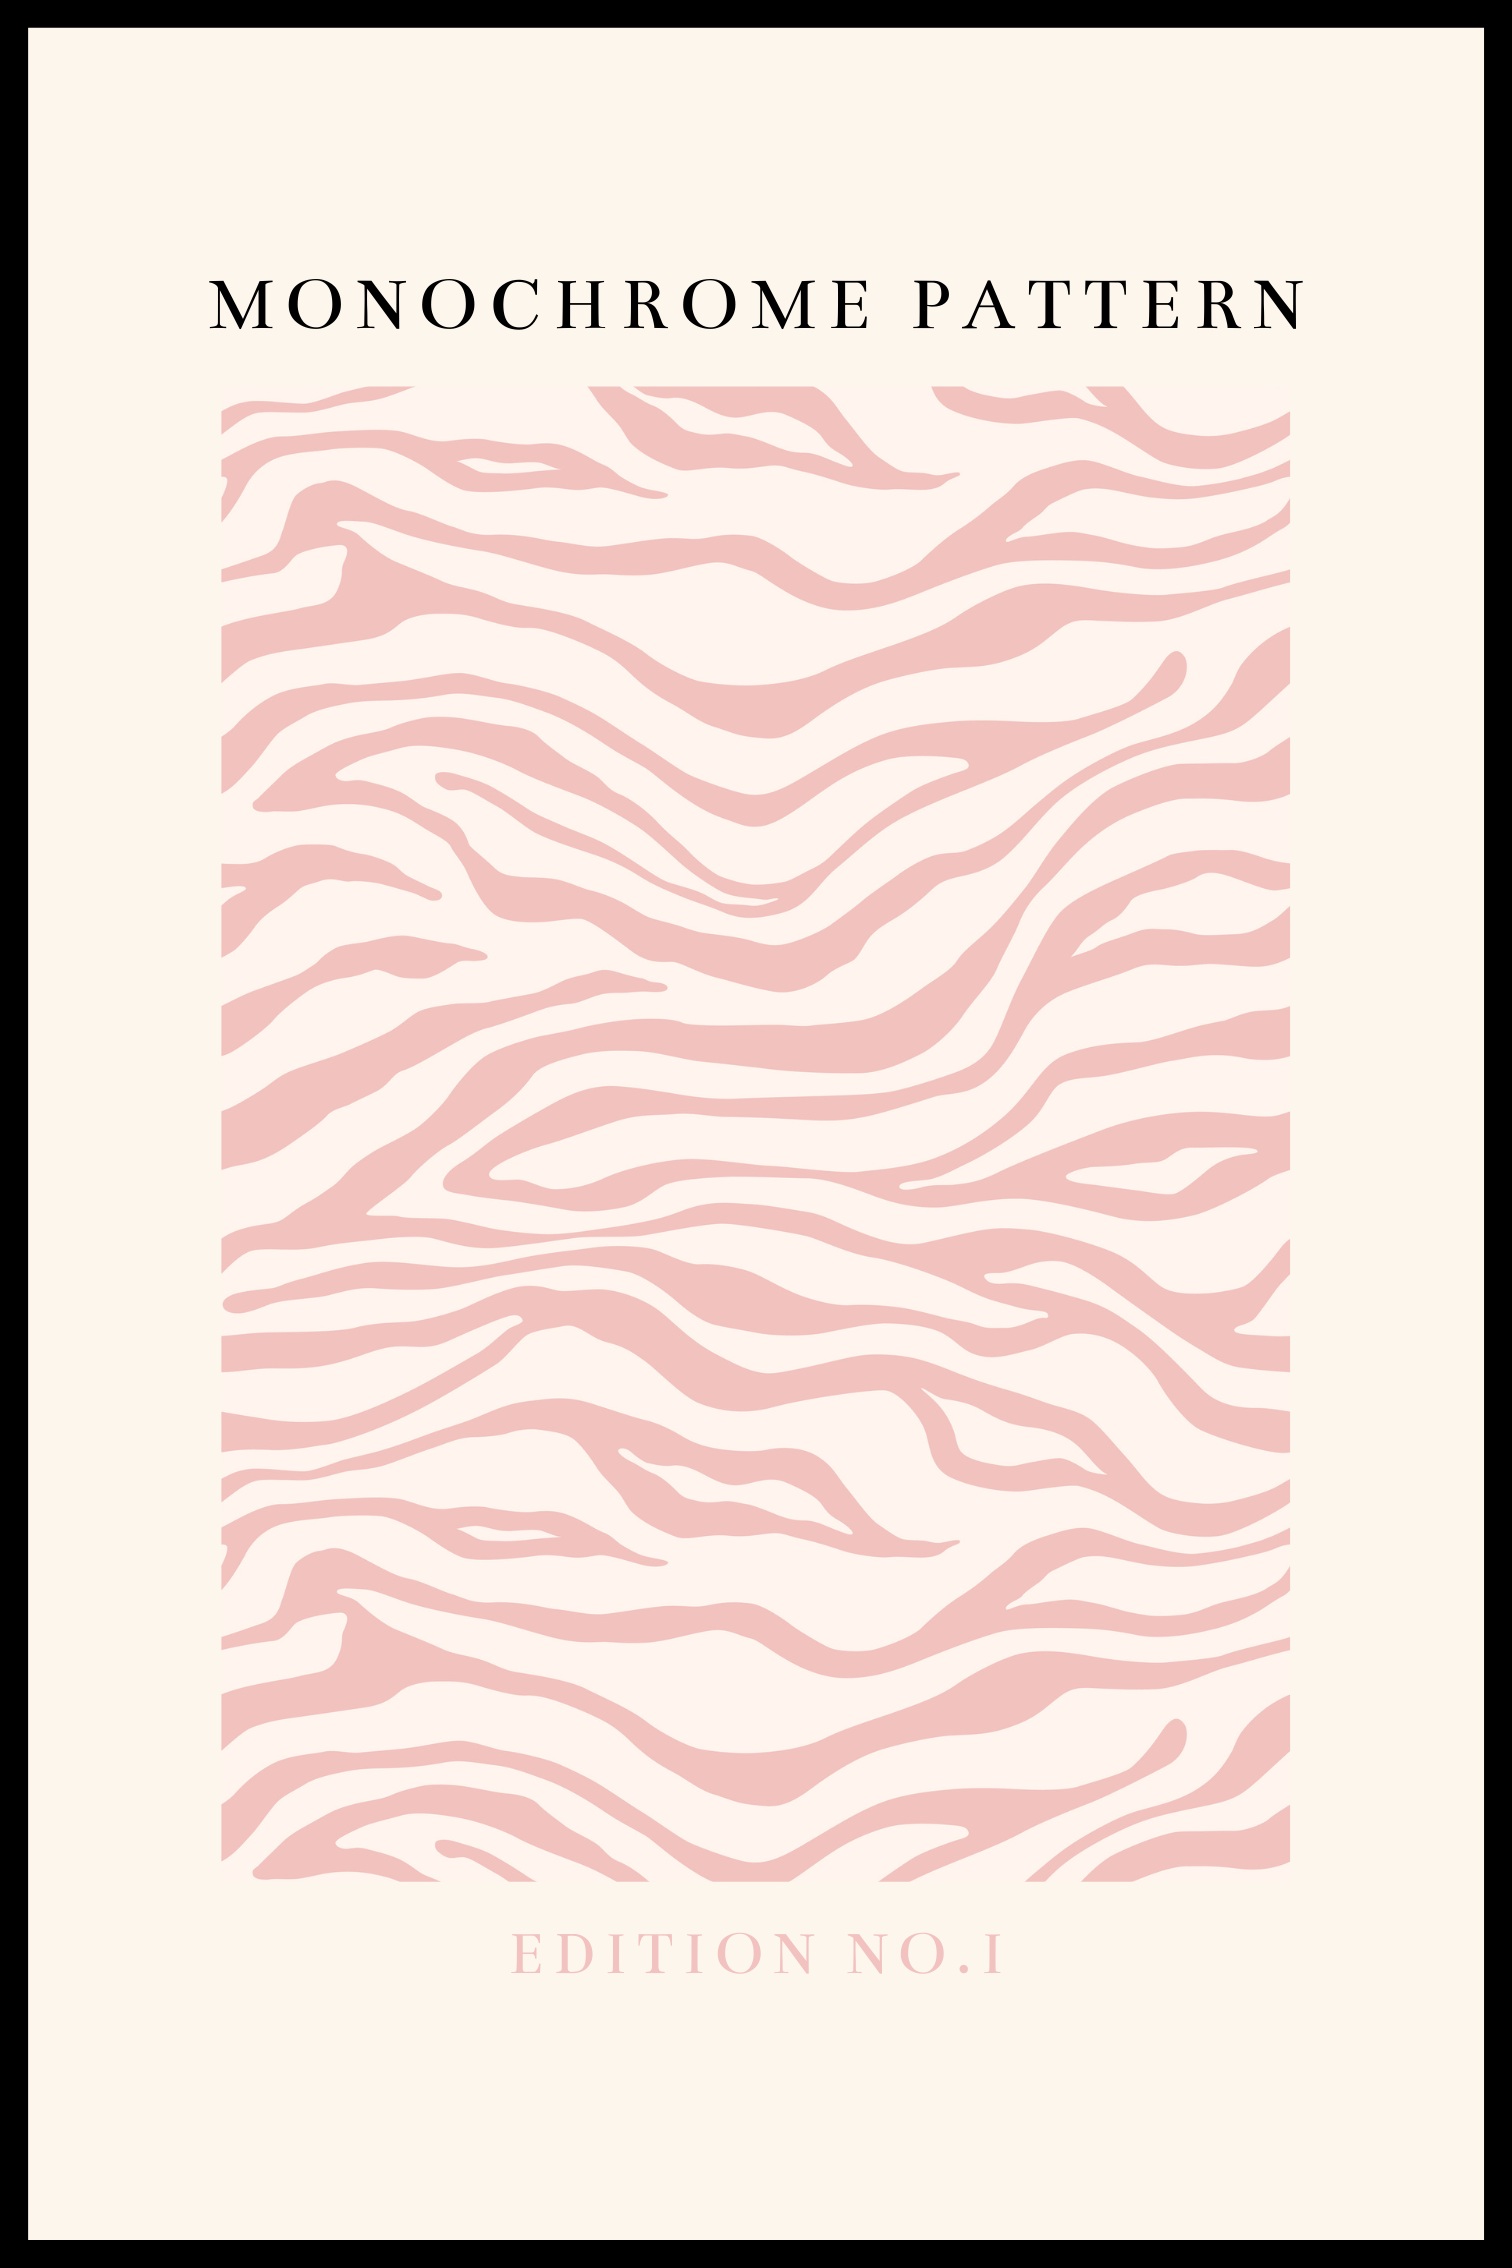 Monochrome pattern plakat